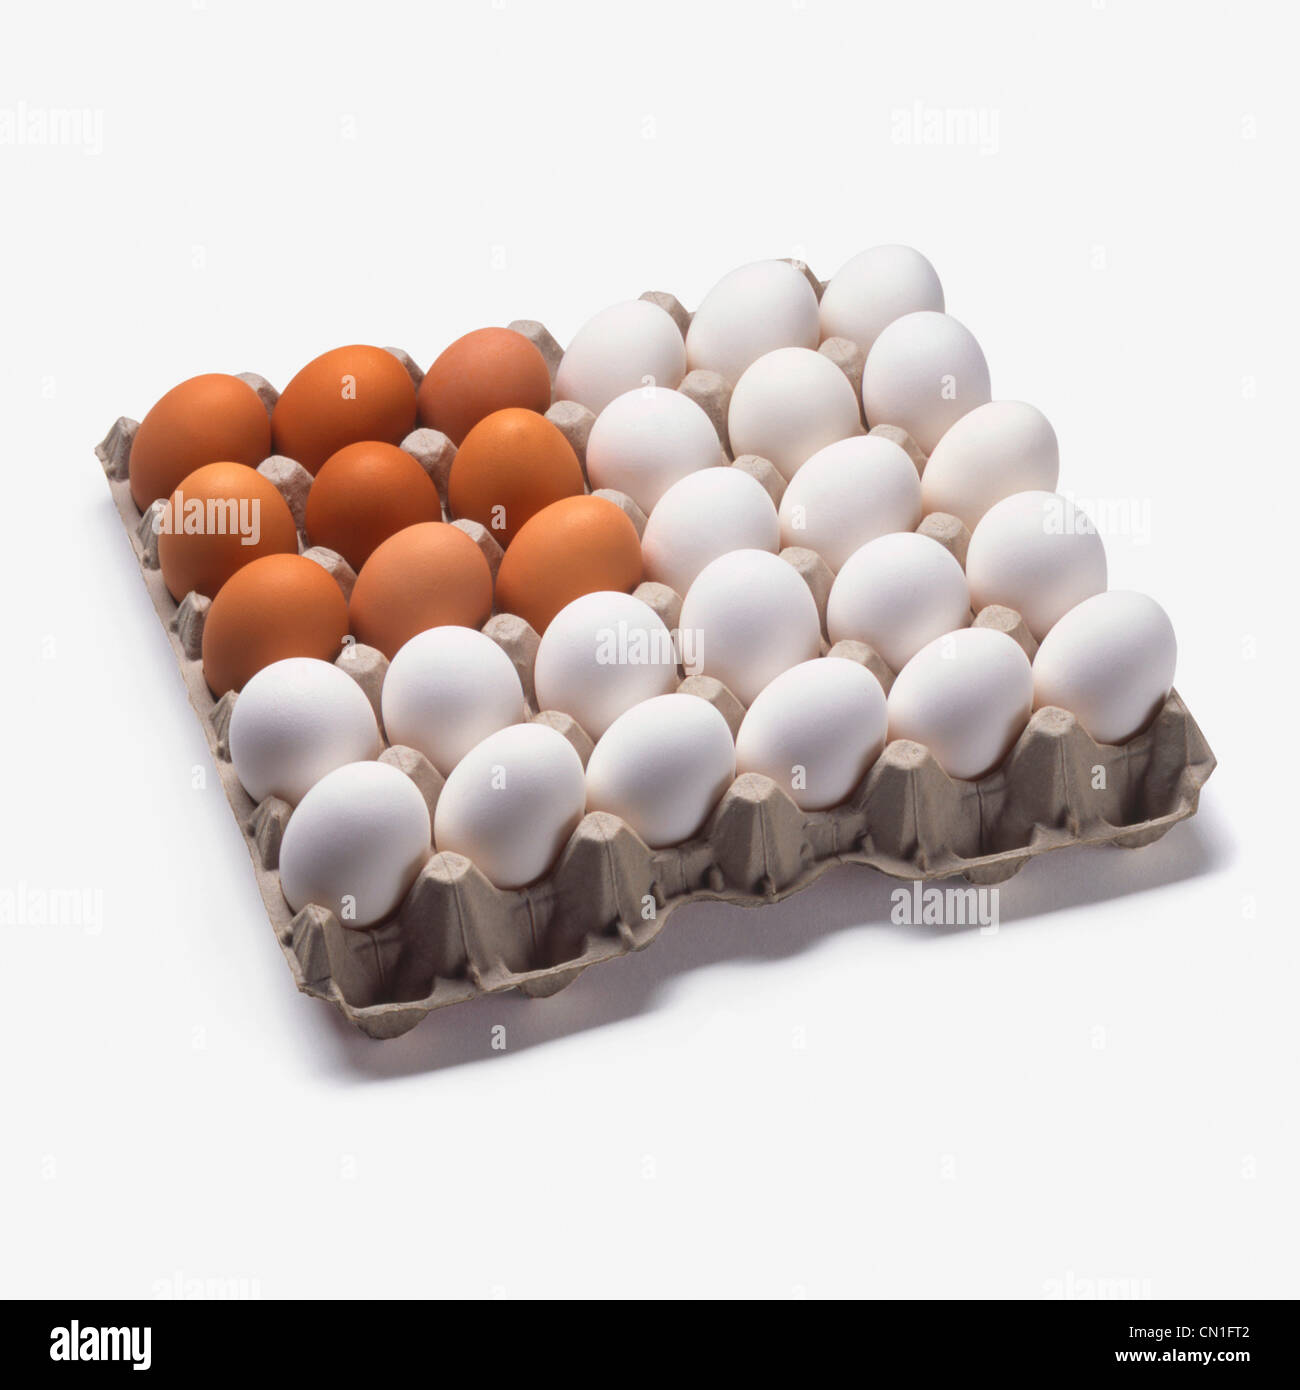 American Flag Eggs in Carton Stock Photo